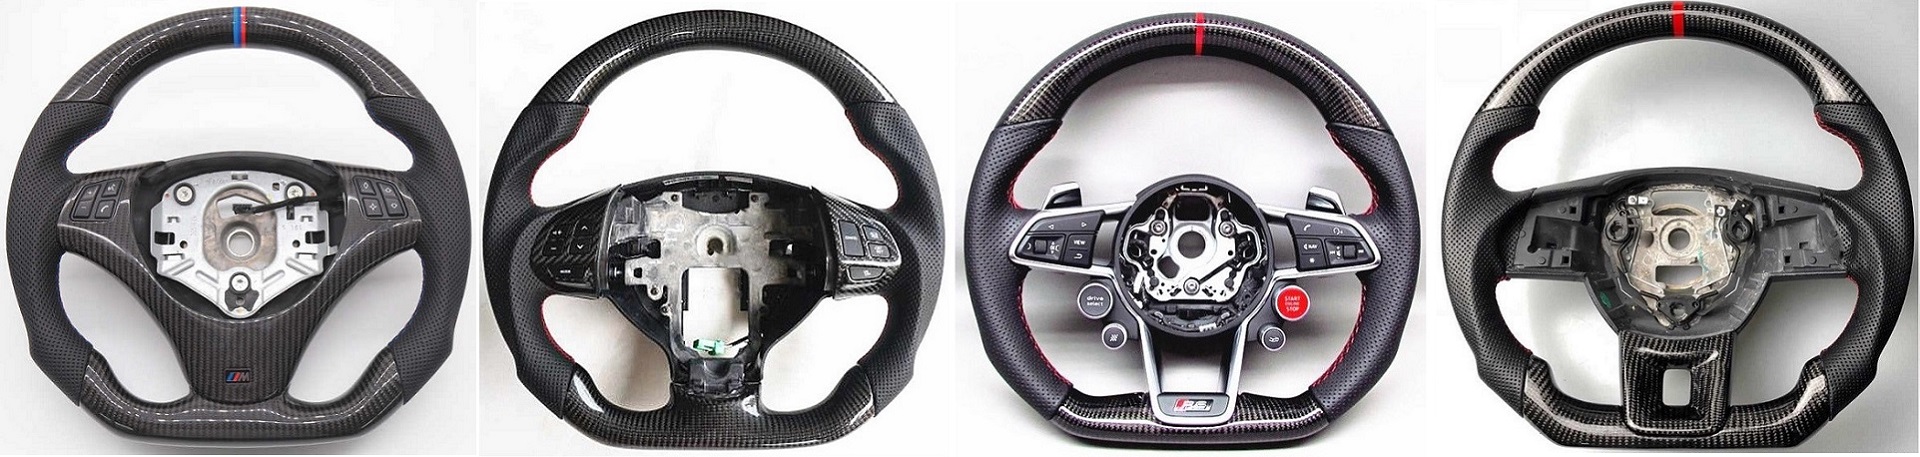 Kierownica Włókno węglowe carbon fiber steering wheel whel